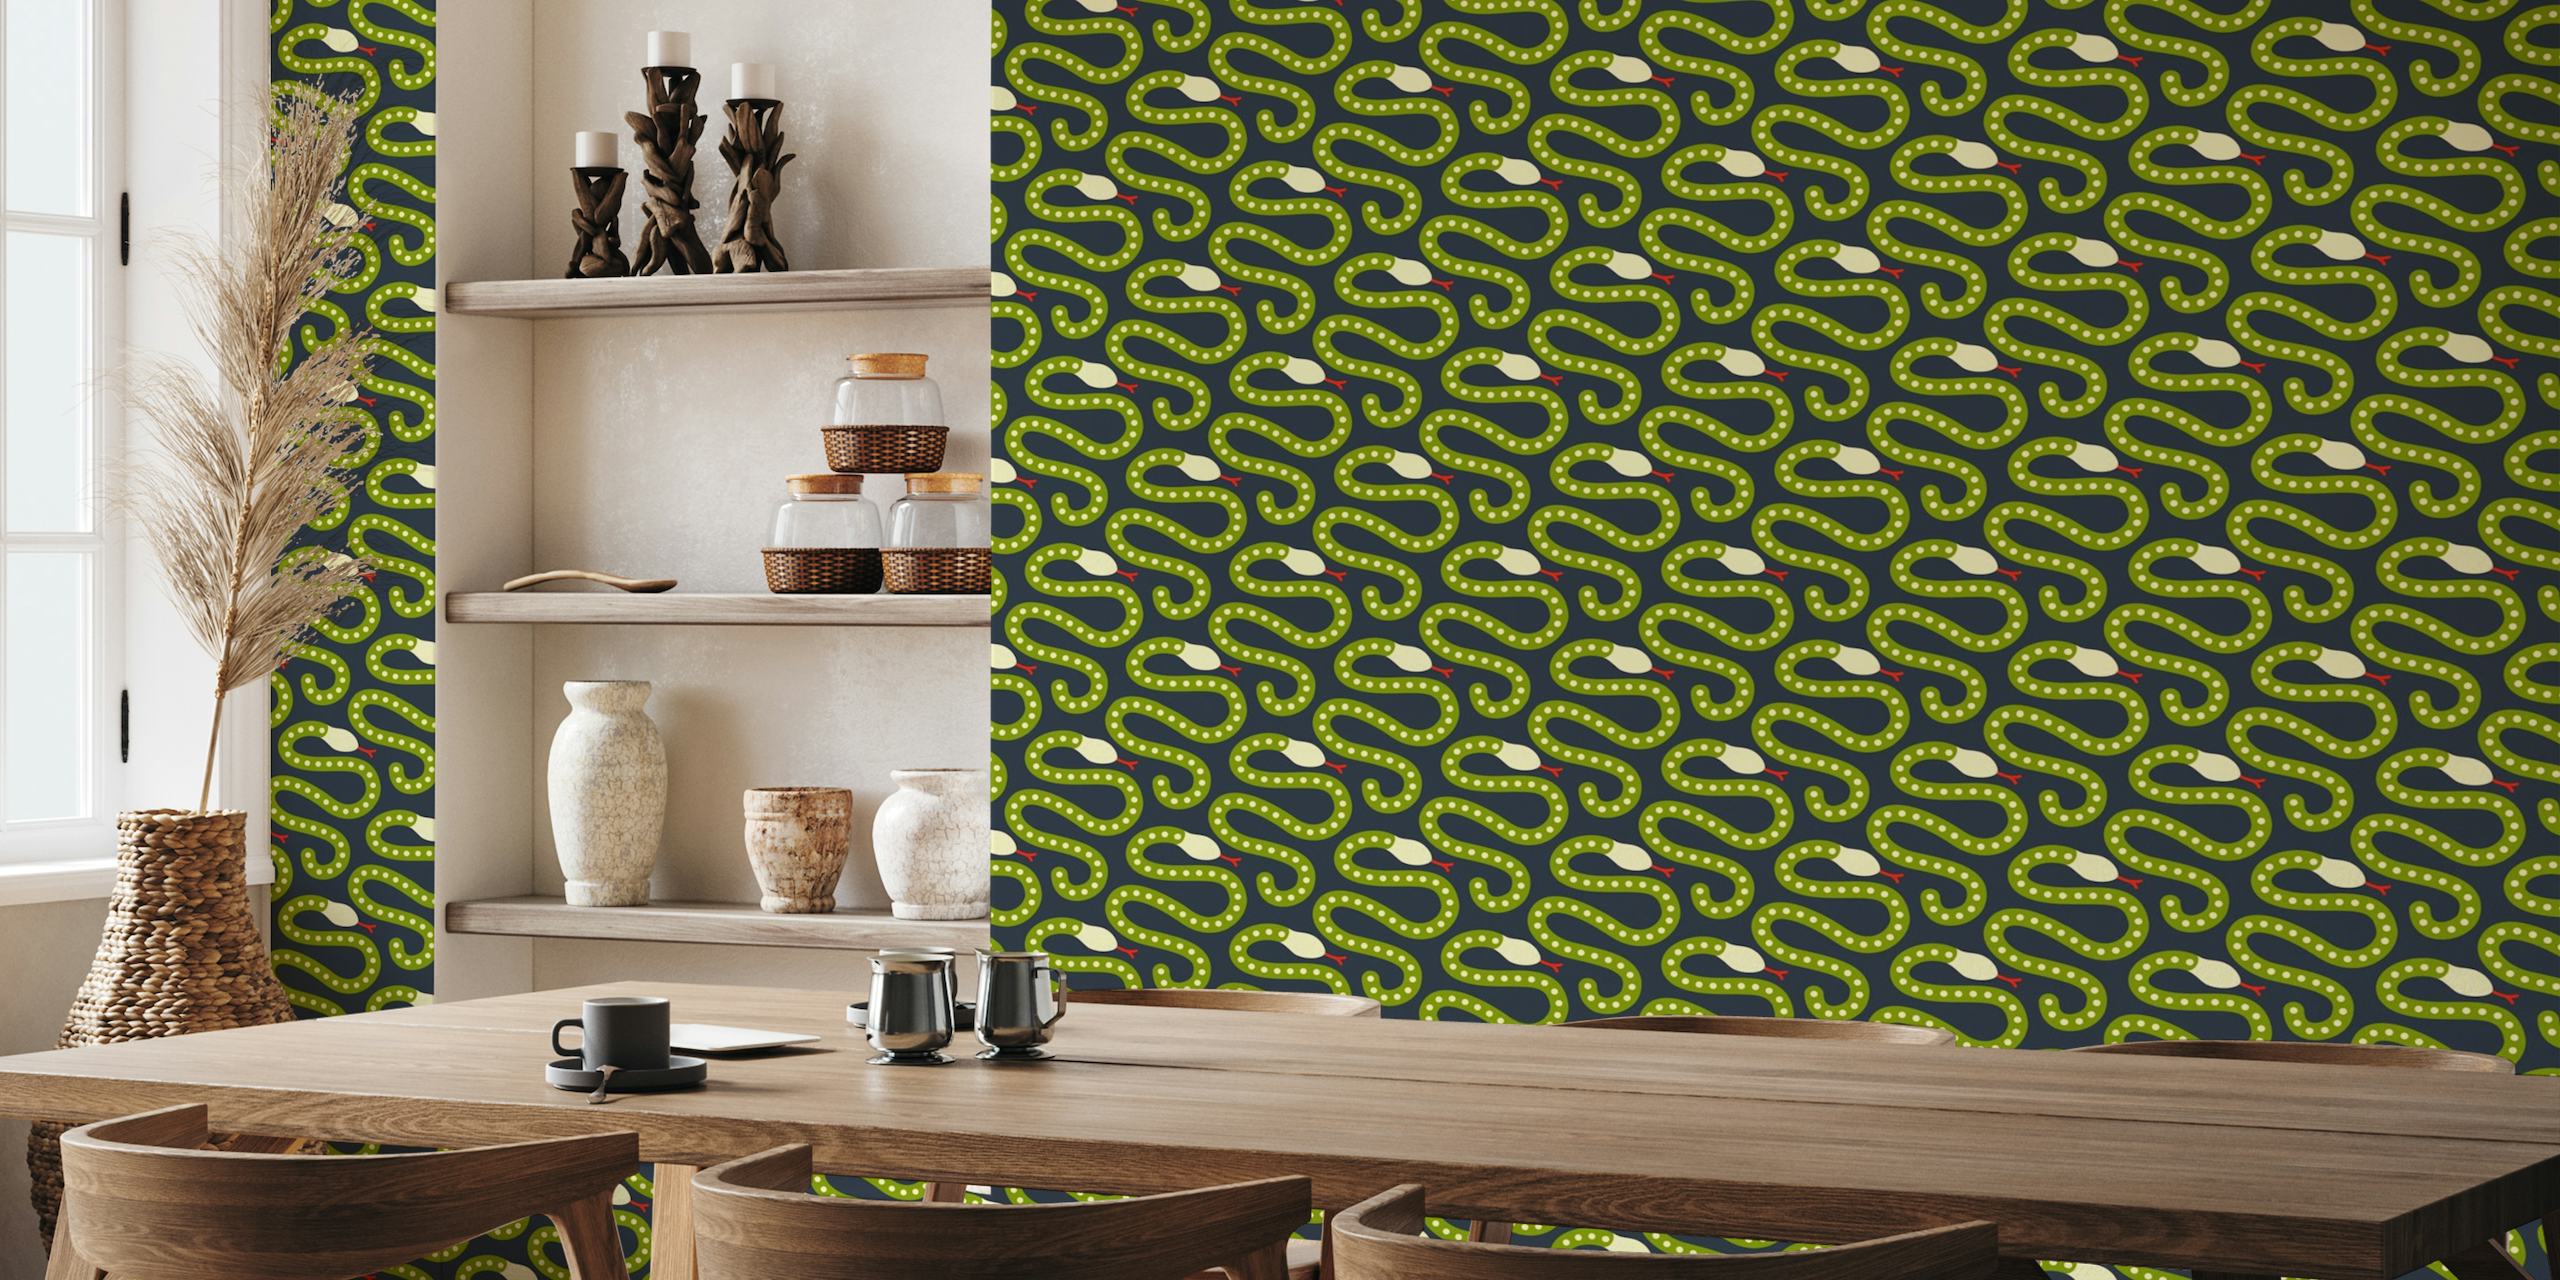 2841 B - green snakes wallpaper